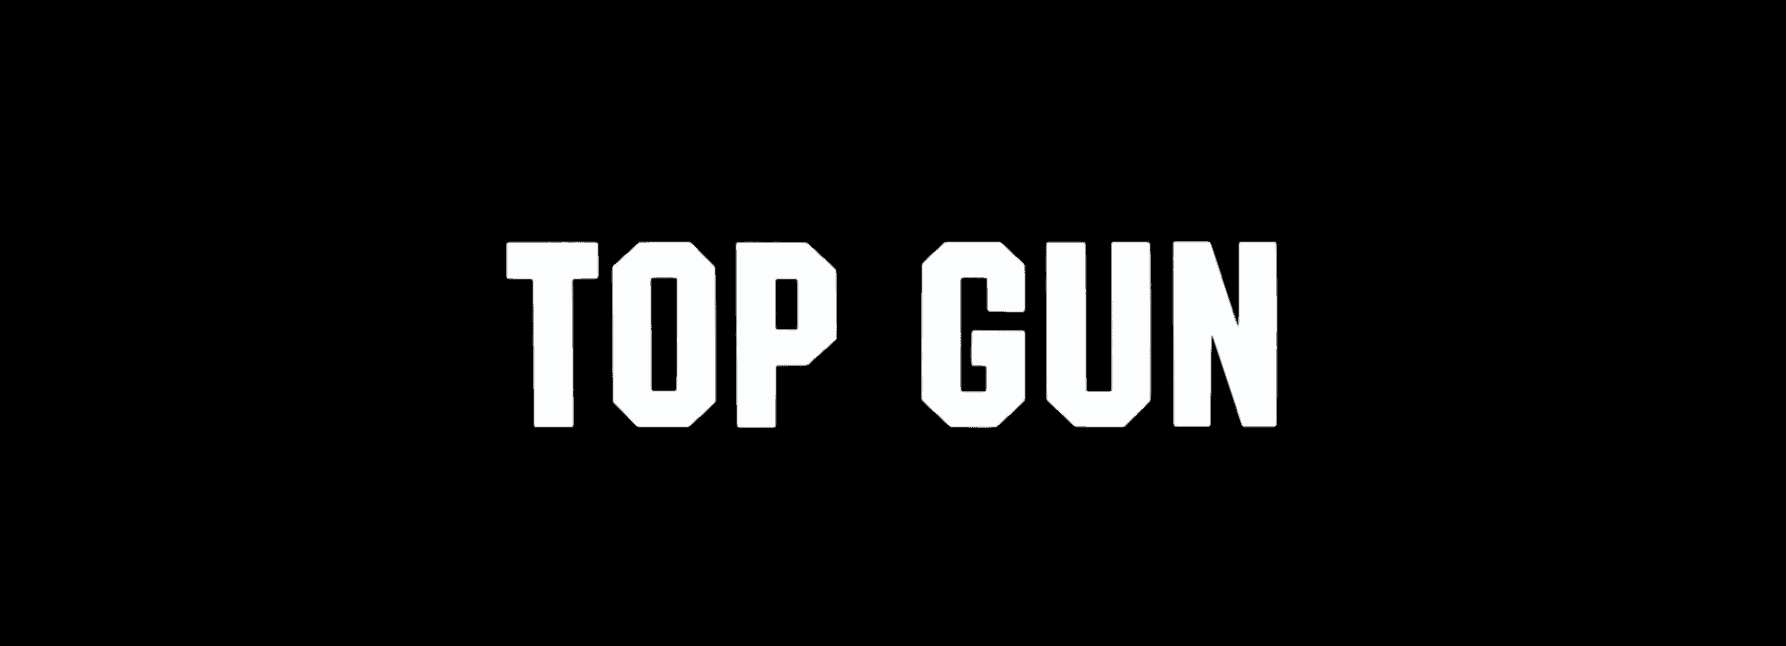 top gun title